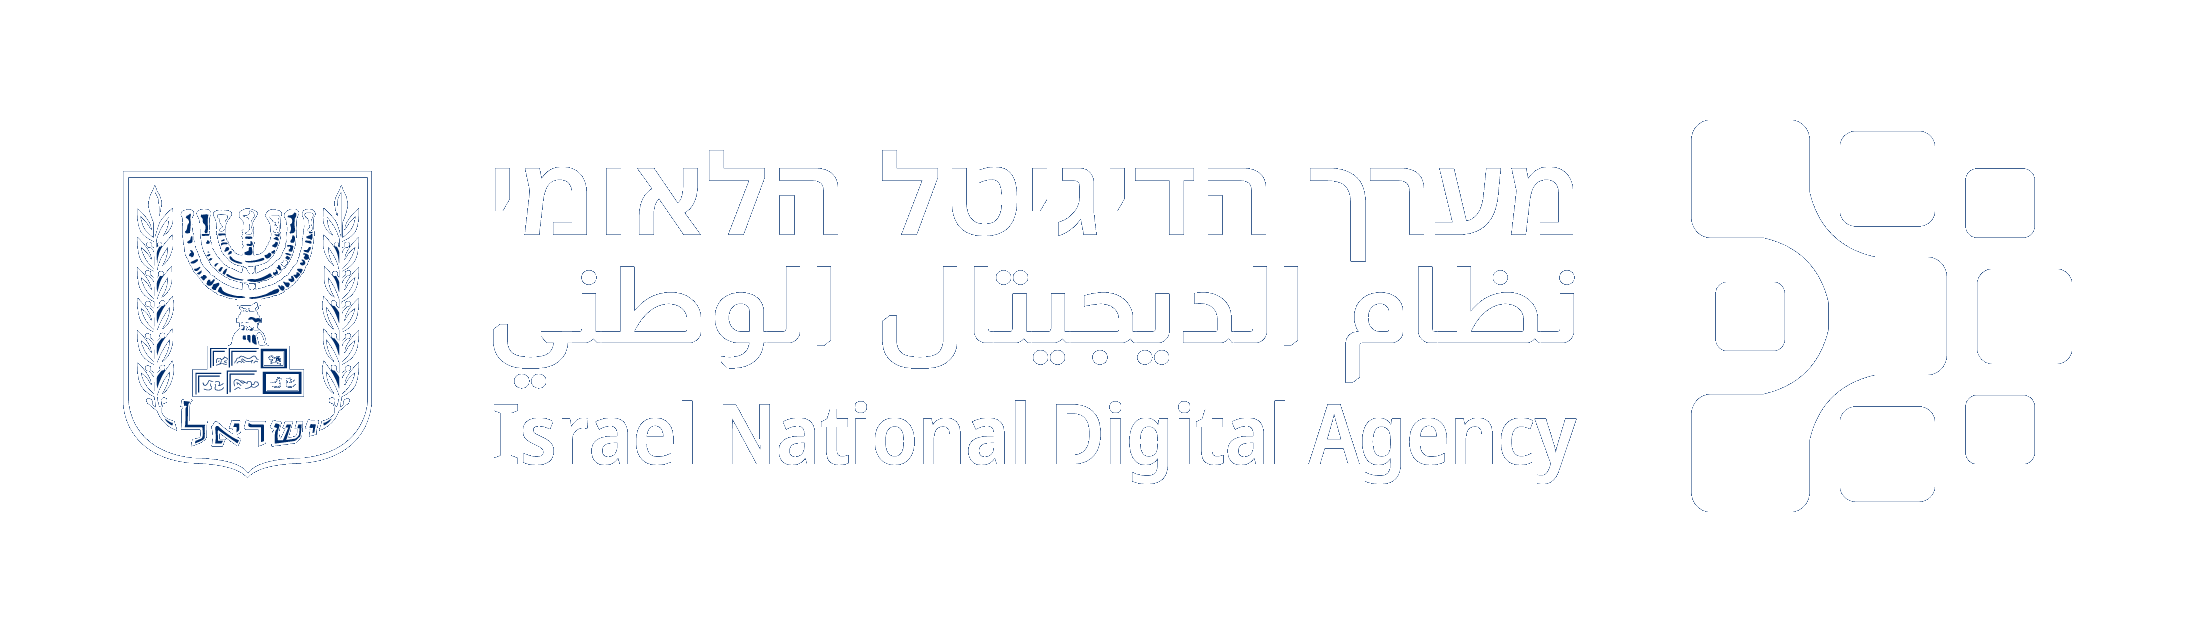 Israel-National-Digital-Agency